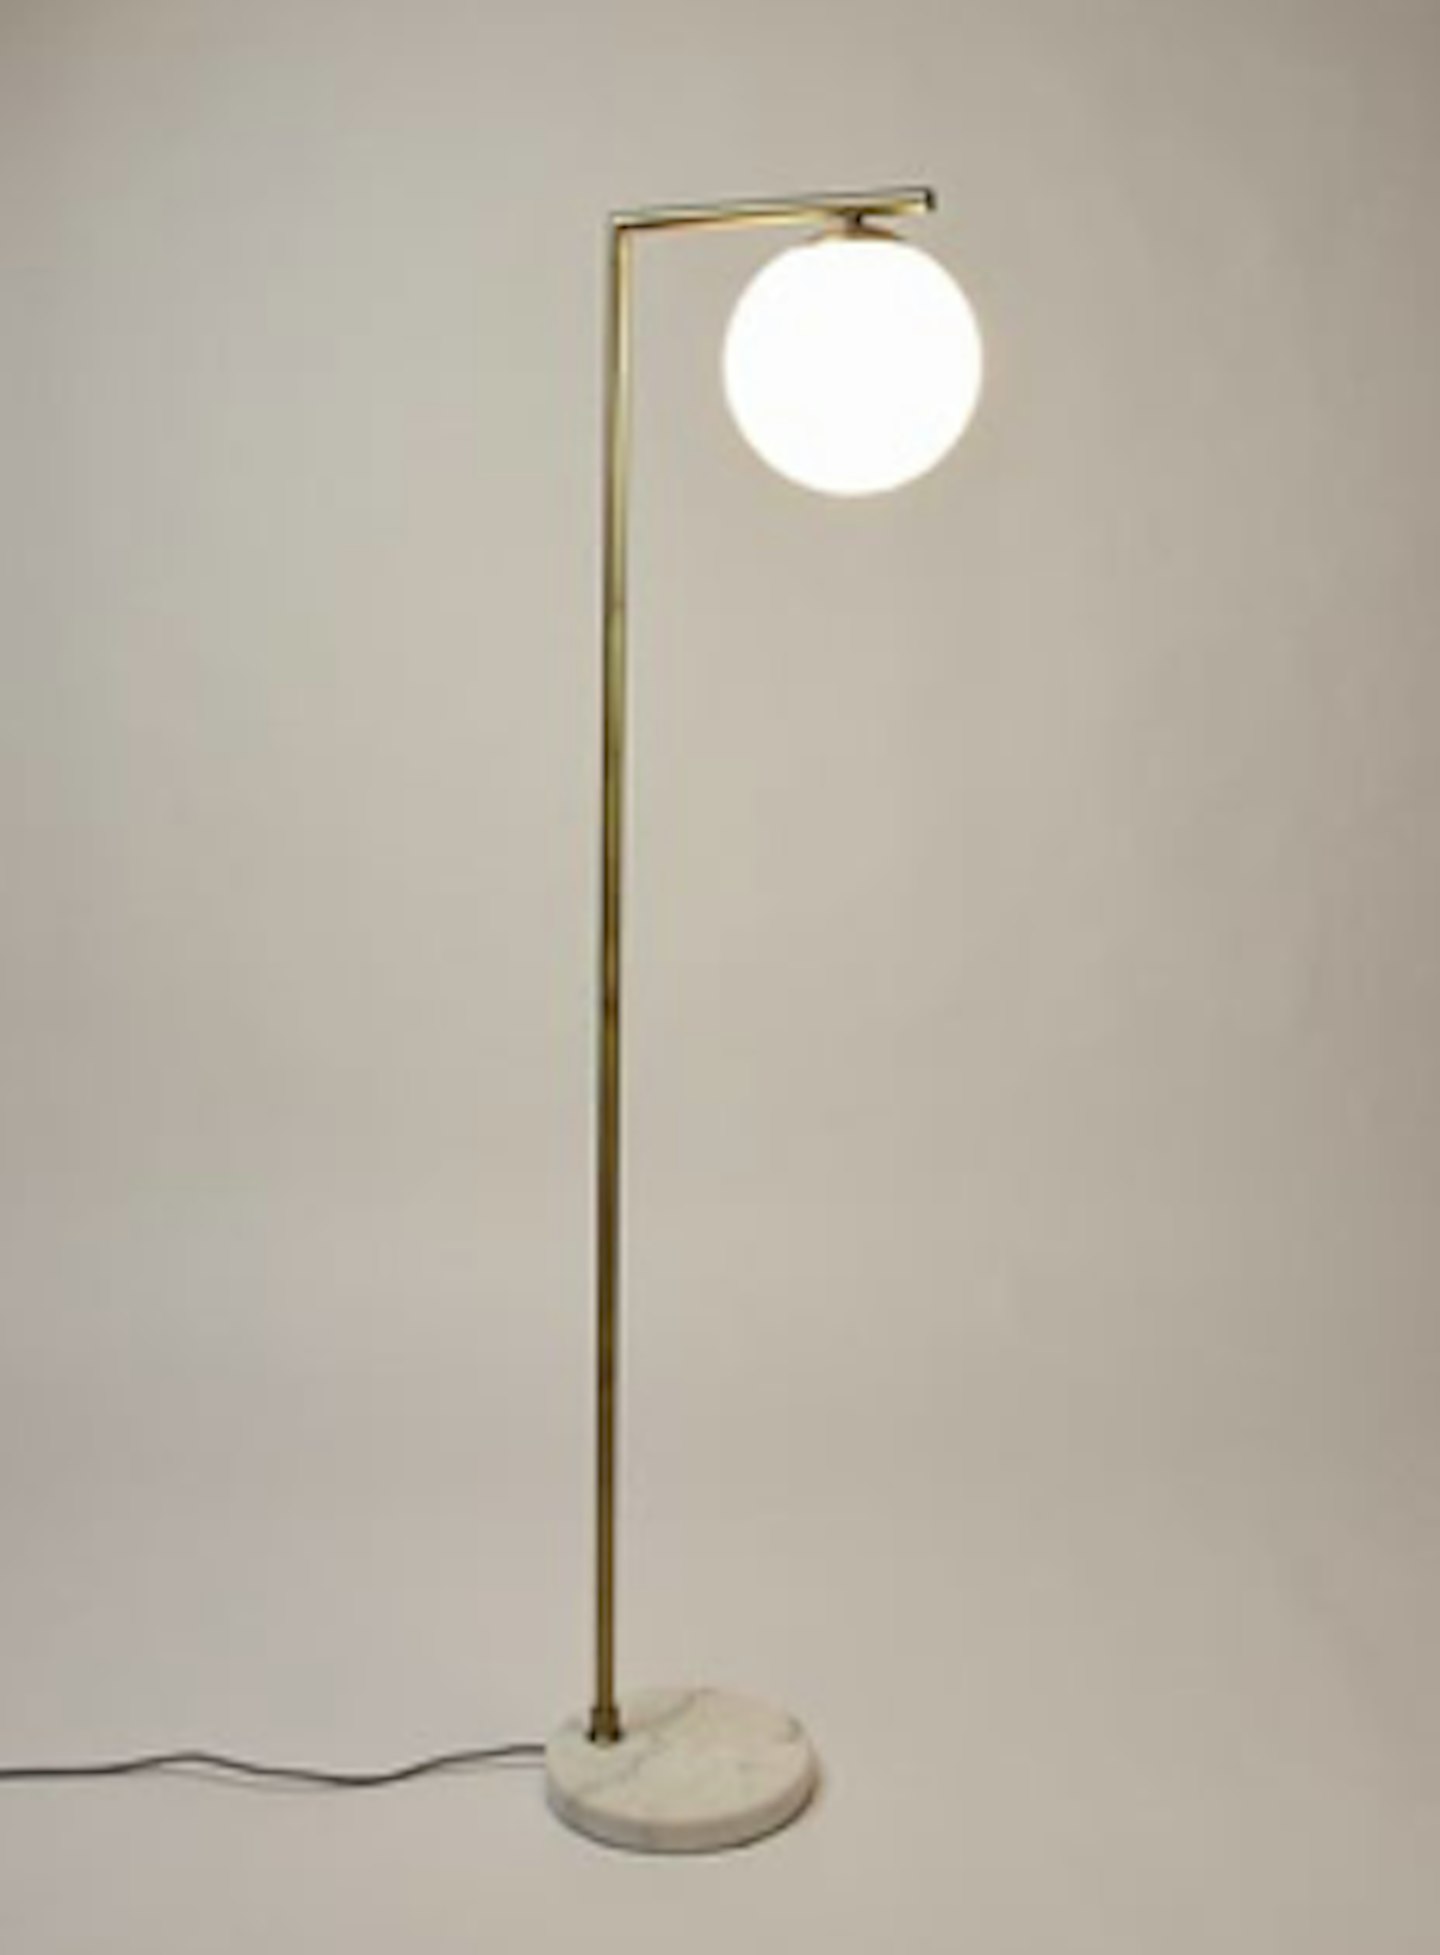 Oliver Bonas, Downbridge Marble Floor Lamp, £175